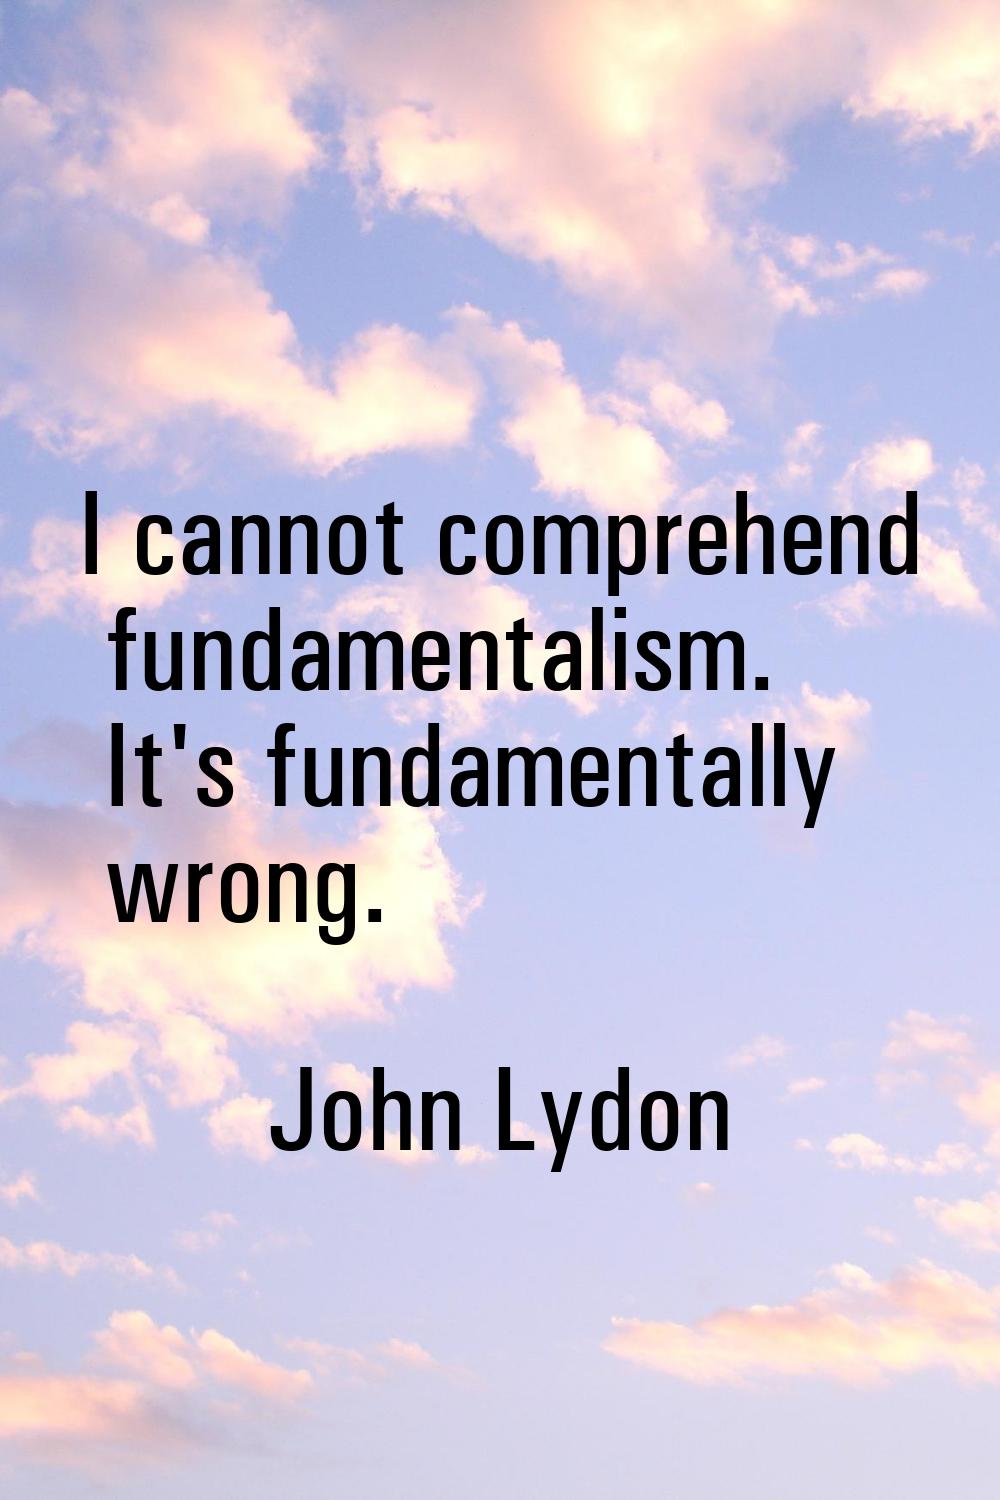 I cannot comprehend fundamentalism. It's fundamentally wrong.